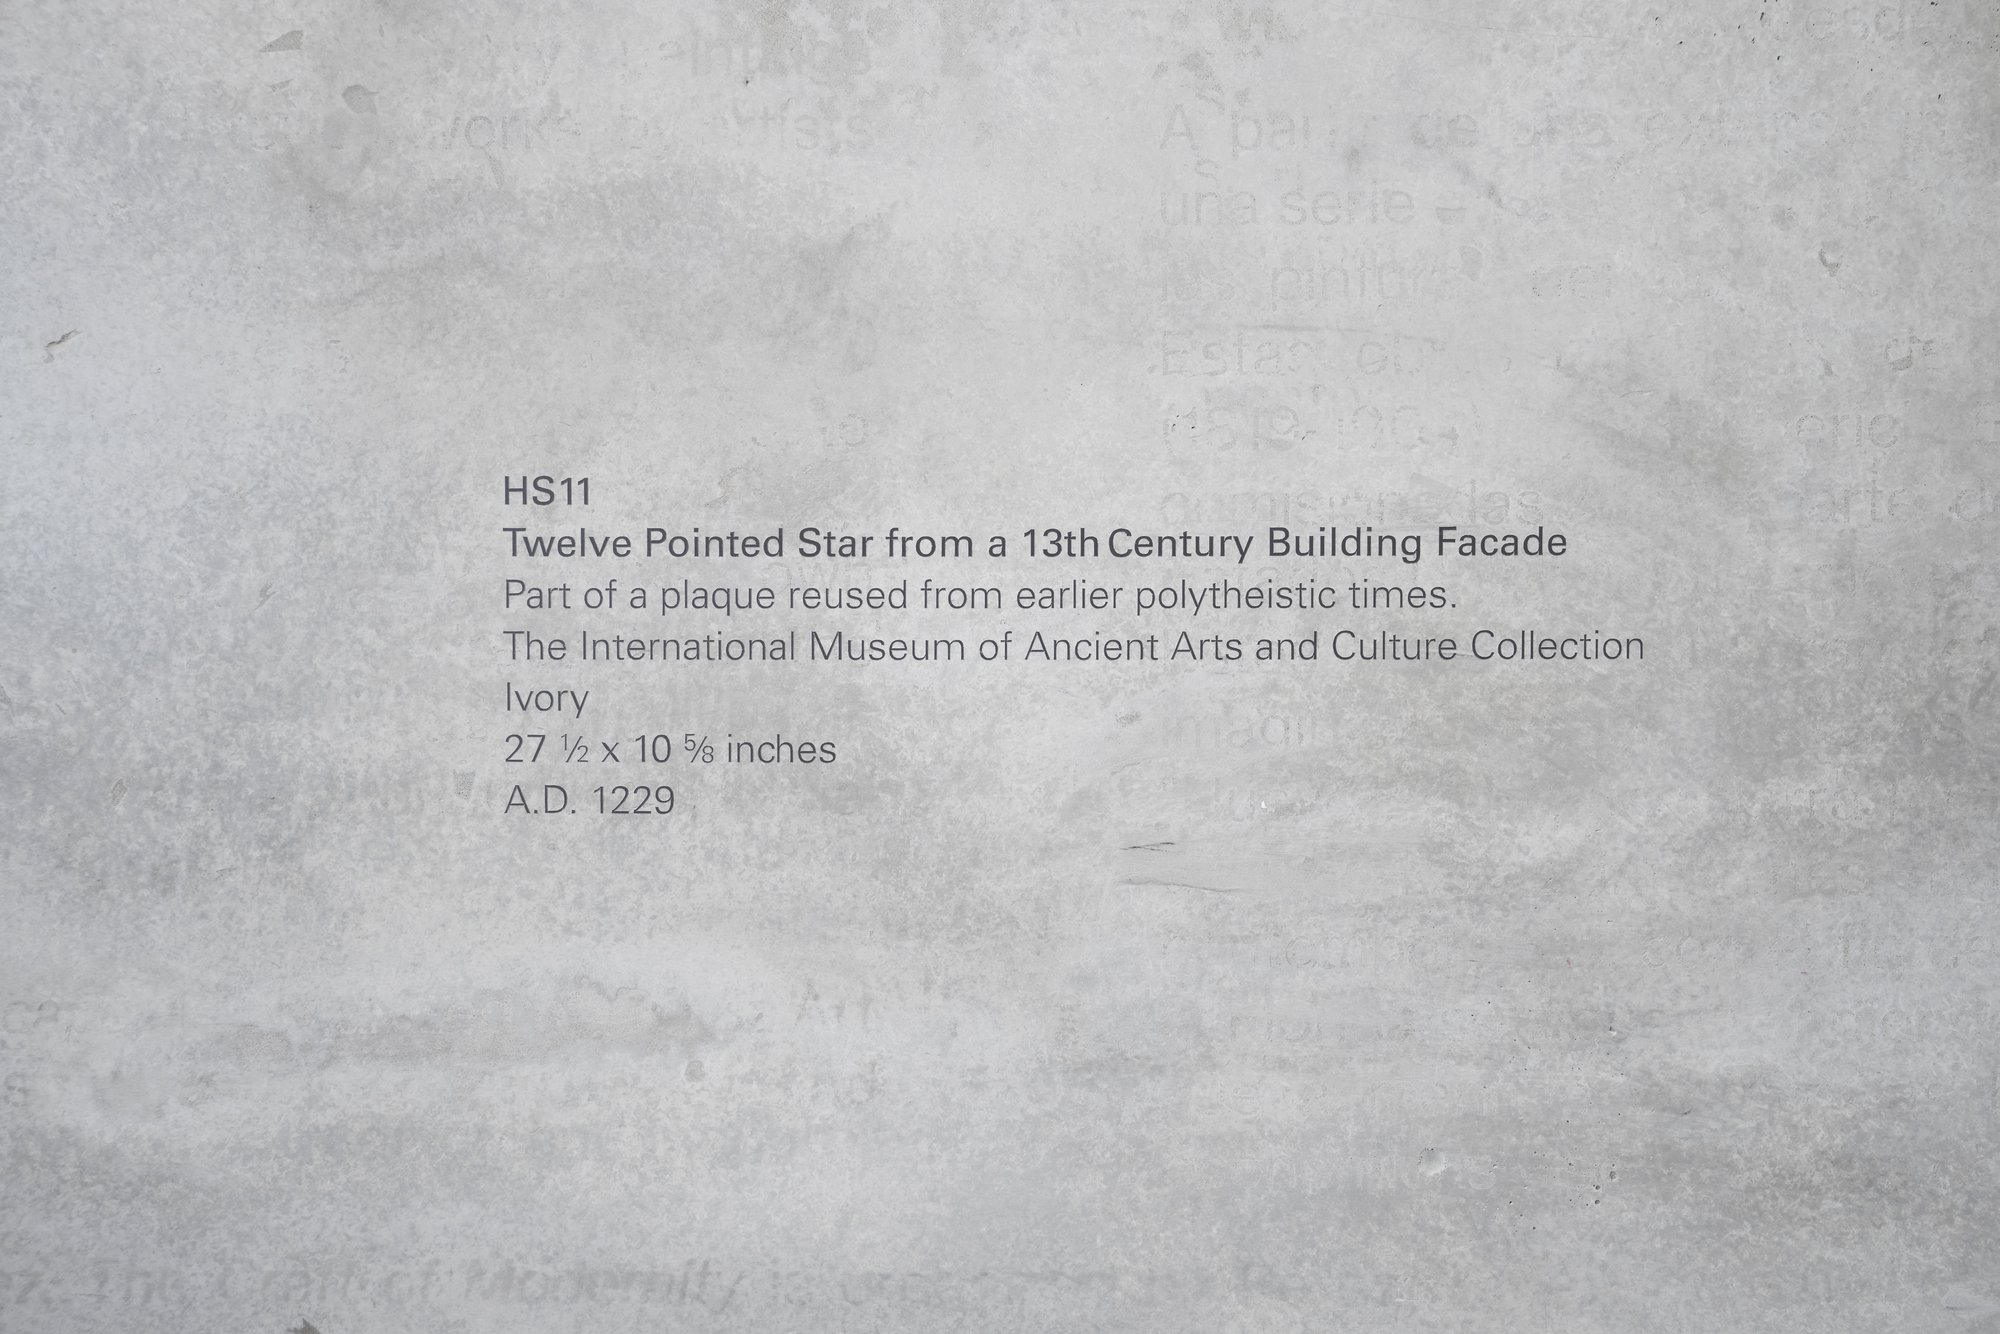 Iman Issa, Heritage Studies #11, blackened wood, two painted white plinths, vinyl text, 195 x 160 cm, 2015